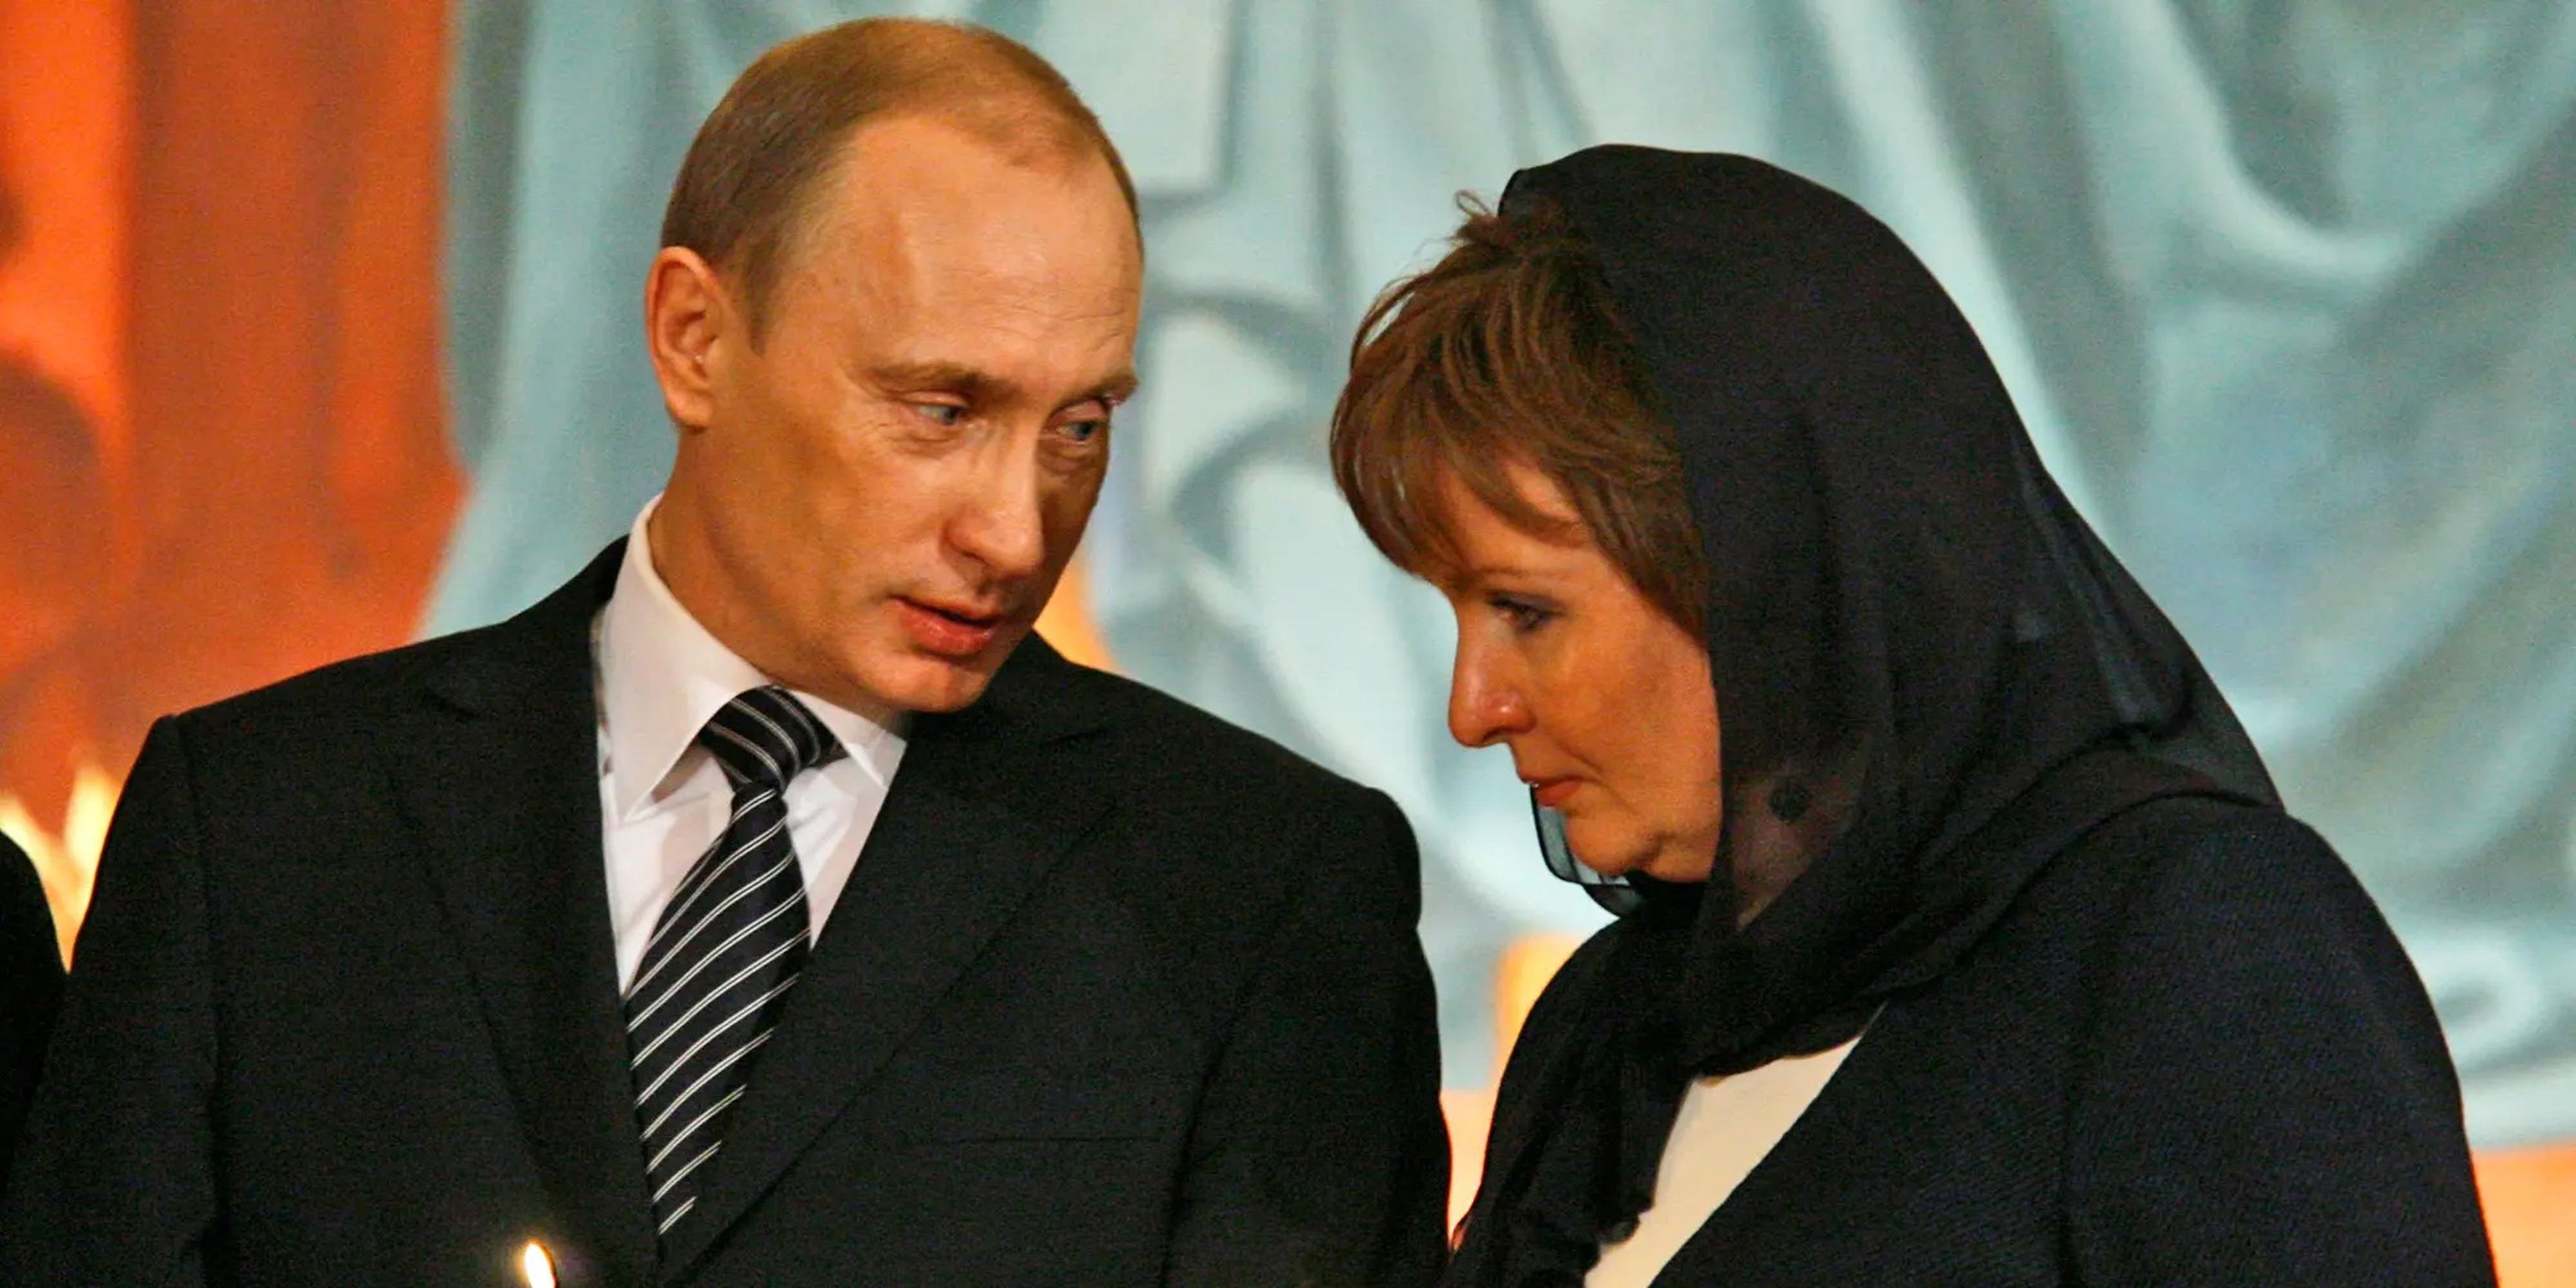 Vladímir Putin y su ahora ex mujer Liudmila Shkrebneva.